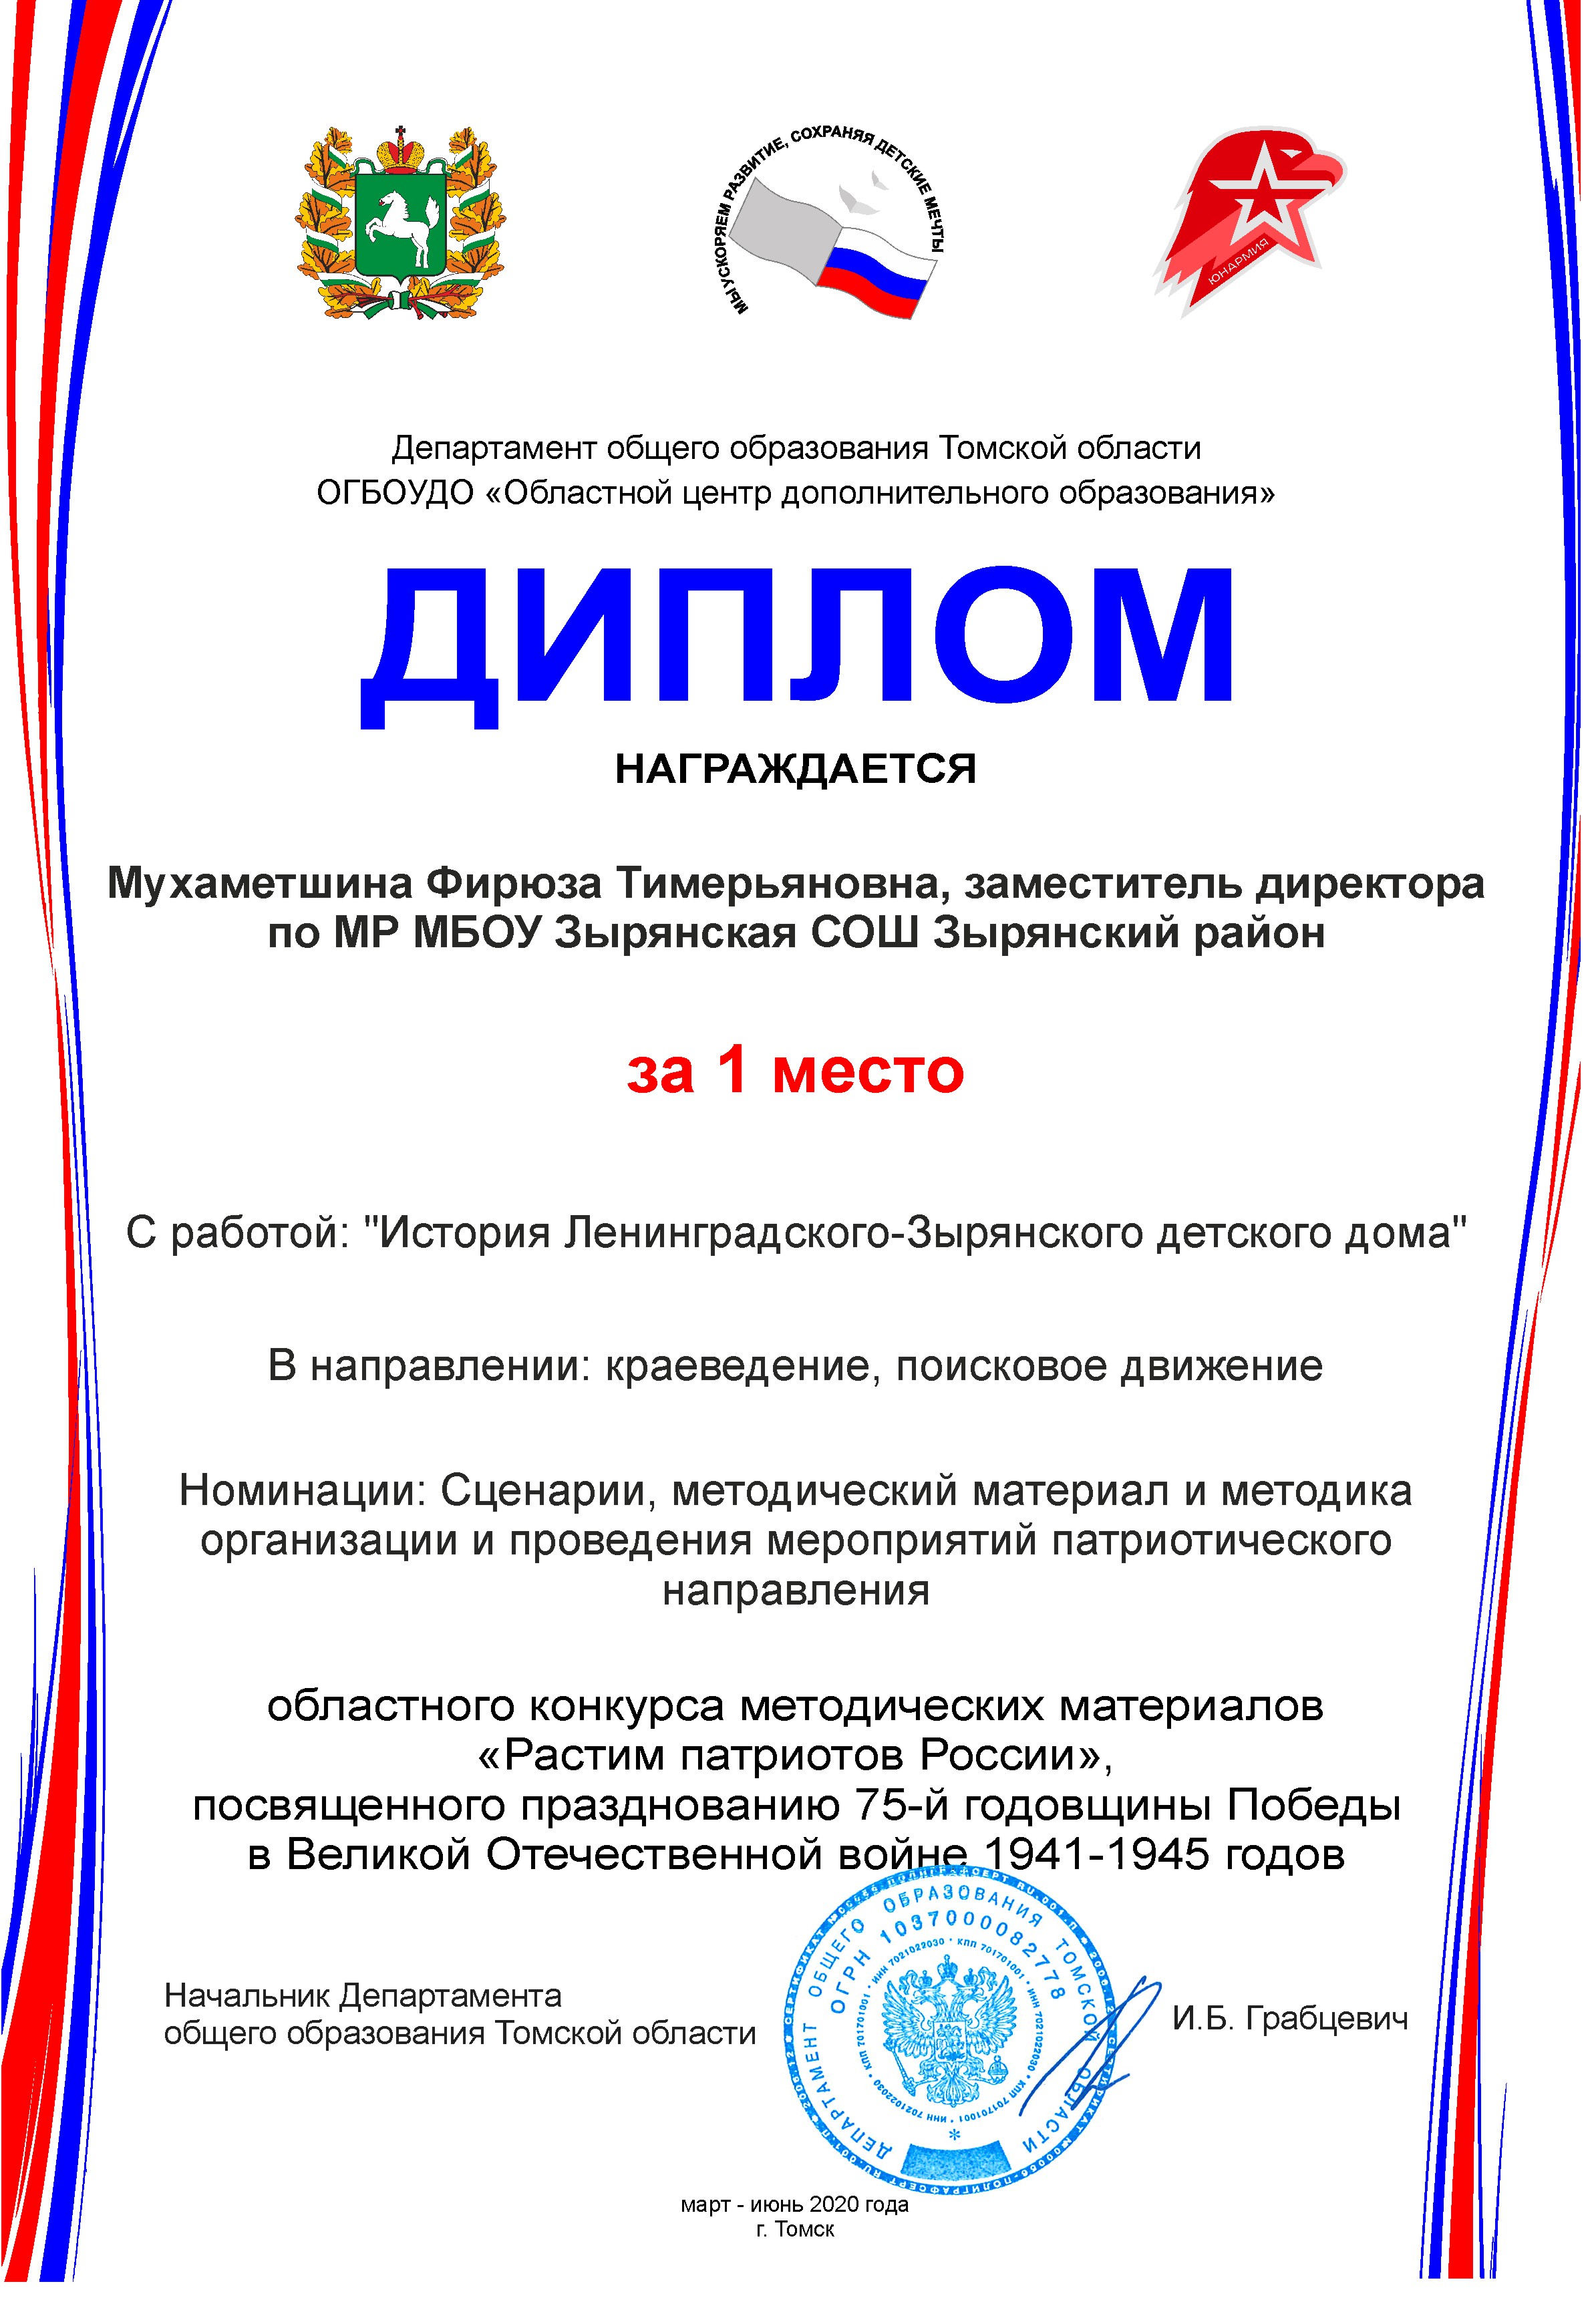 Победа на областном конкурсе «Растим патриотов России»